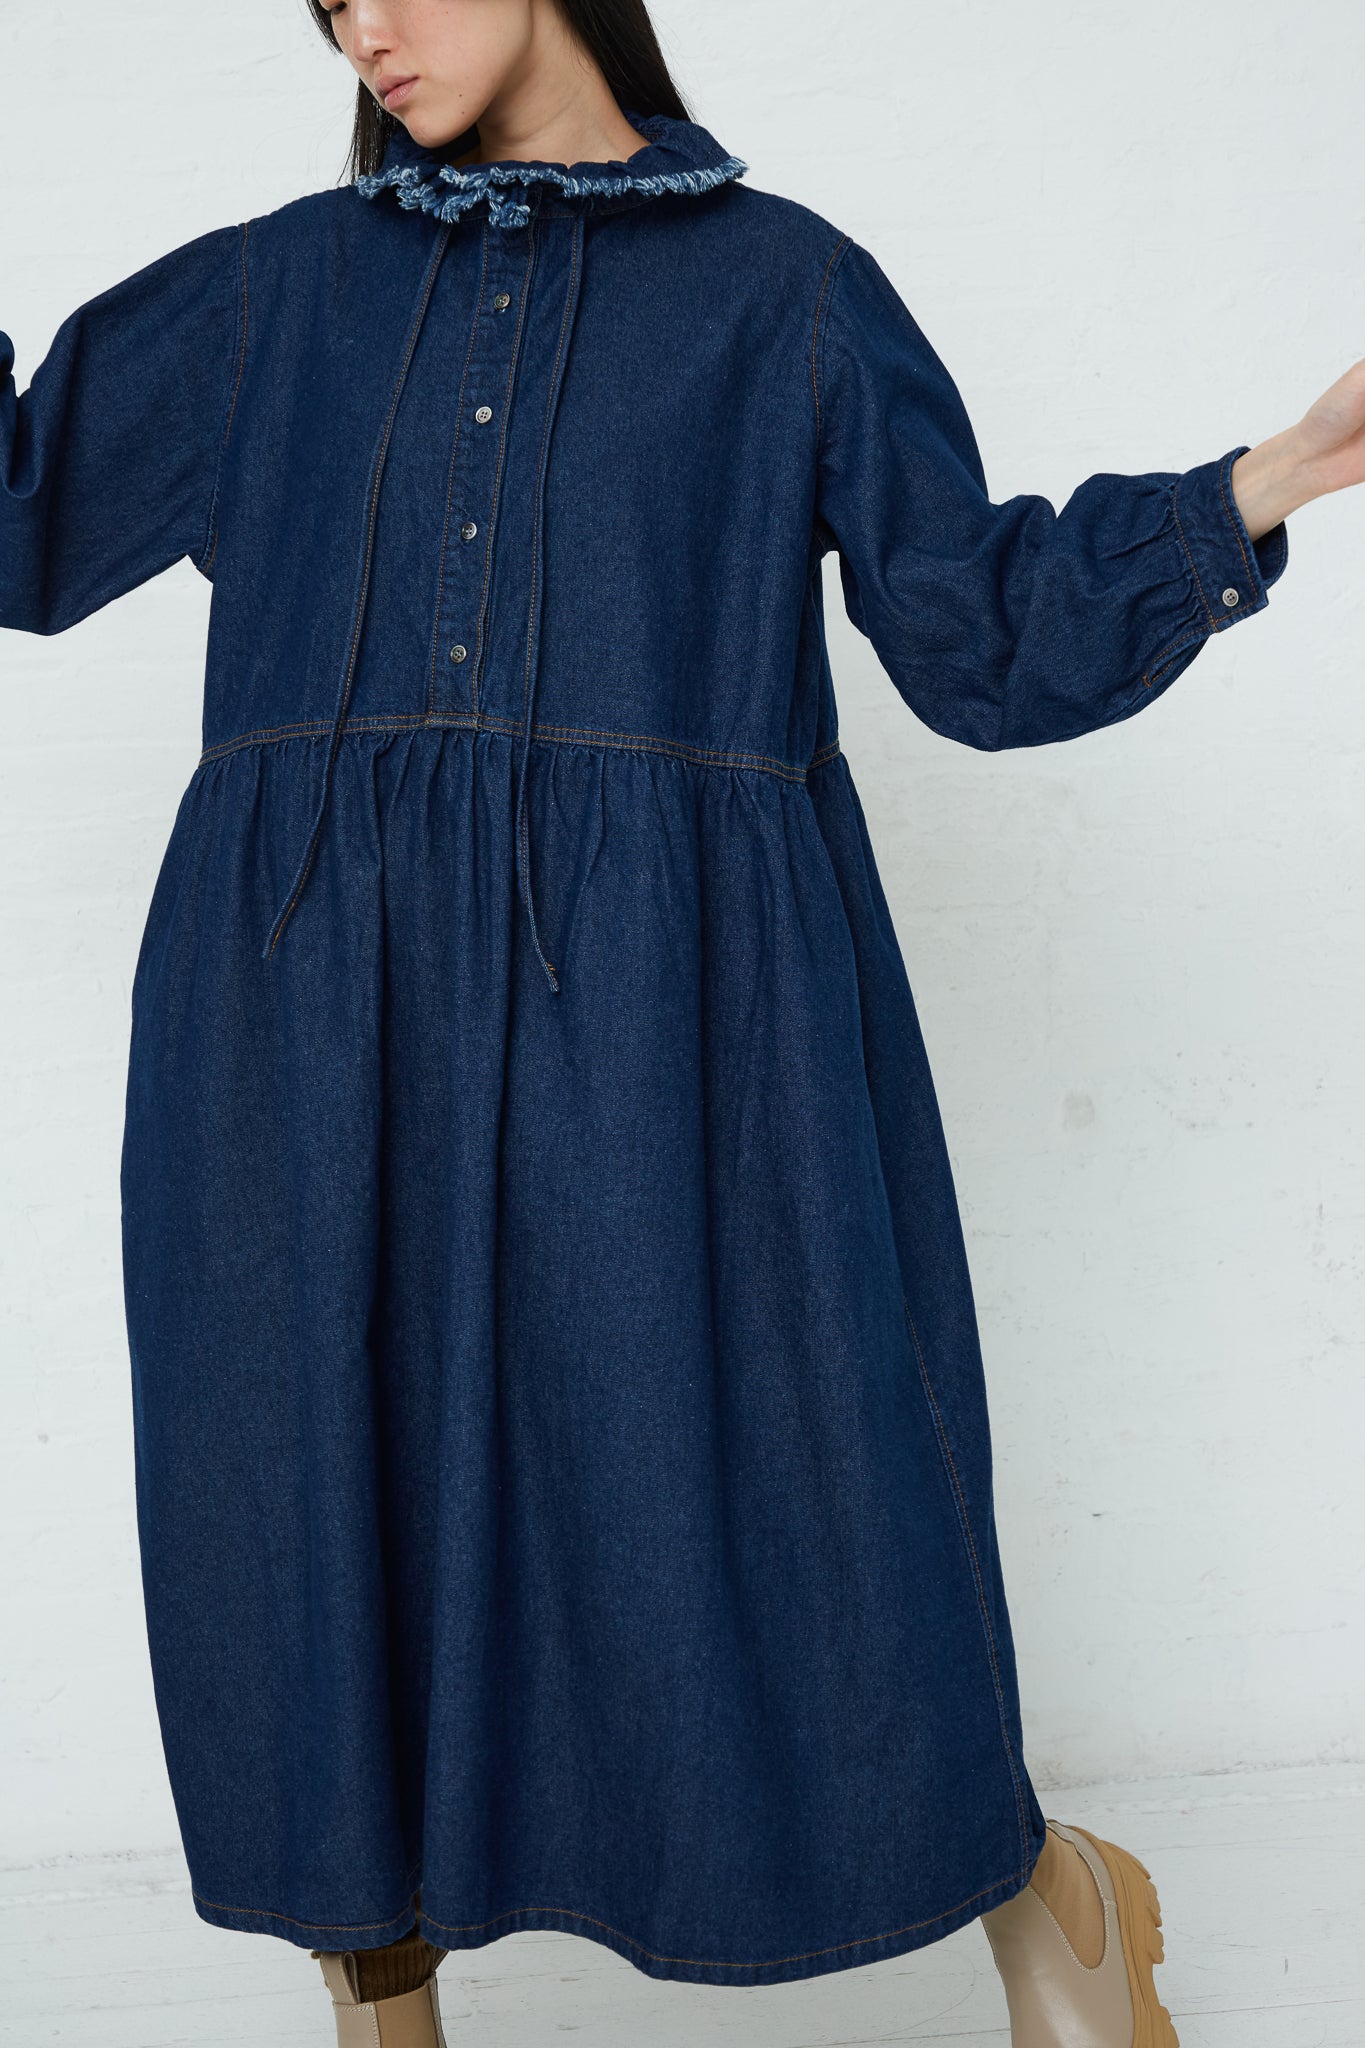 A woman wearing an Ichi Cotton Collar Dress in Dark Indigo with ruffled collar.